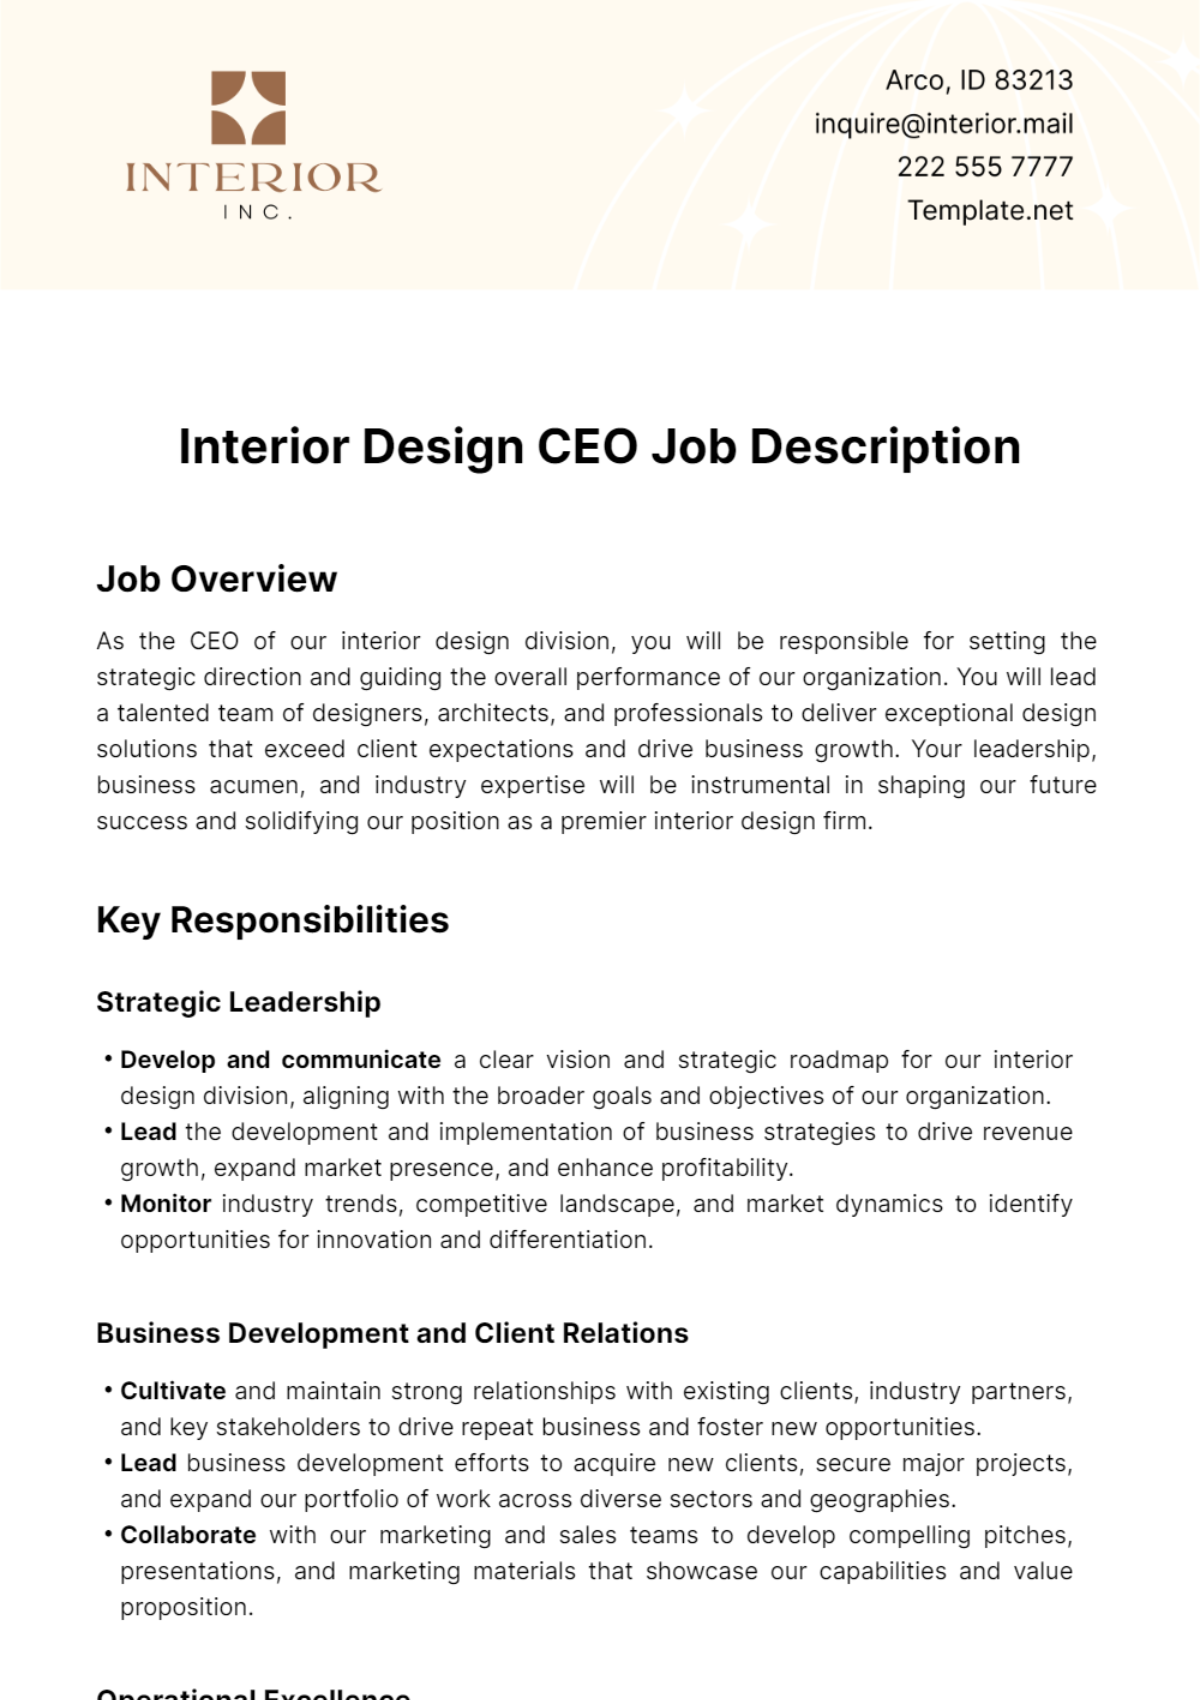 Free Interior Design CEO Job Description Template